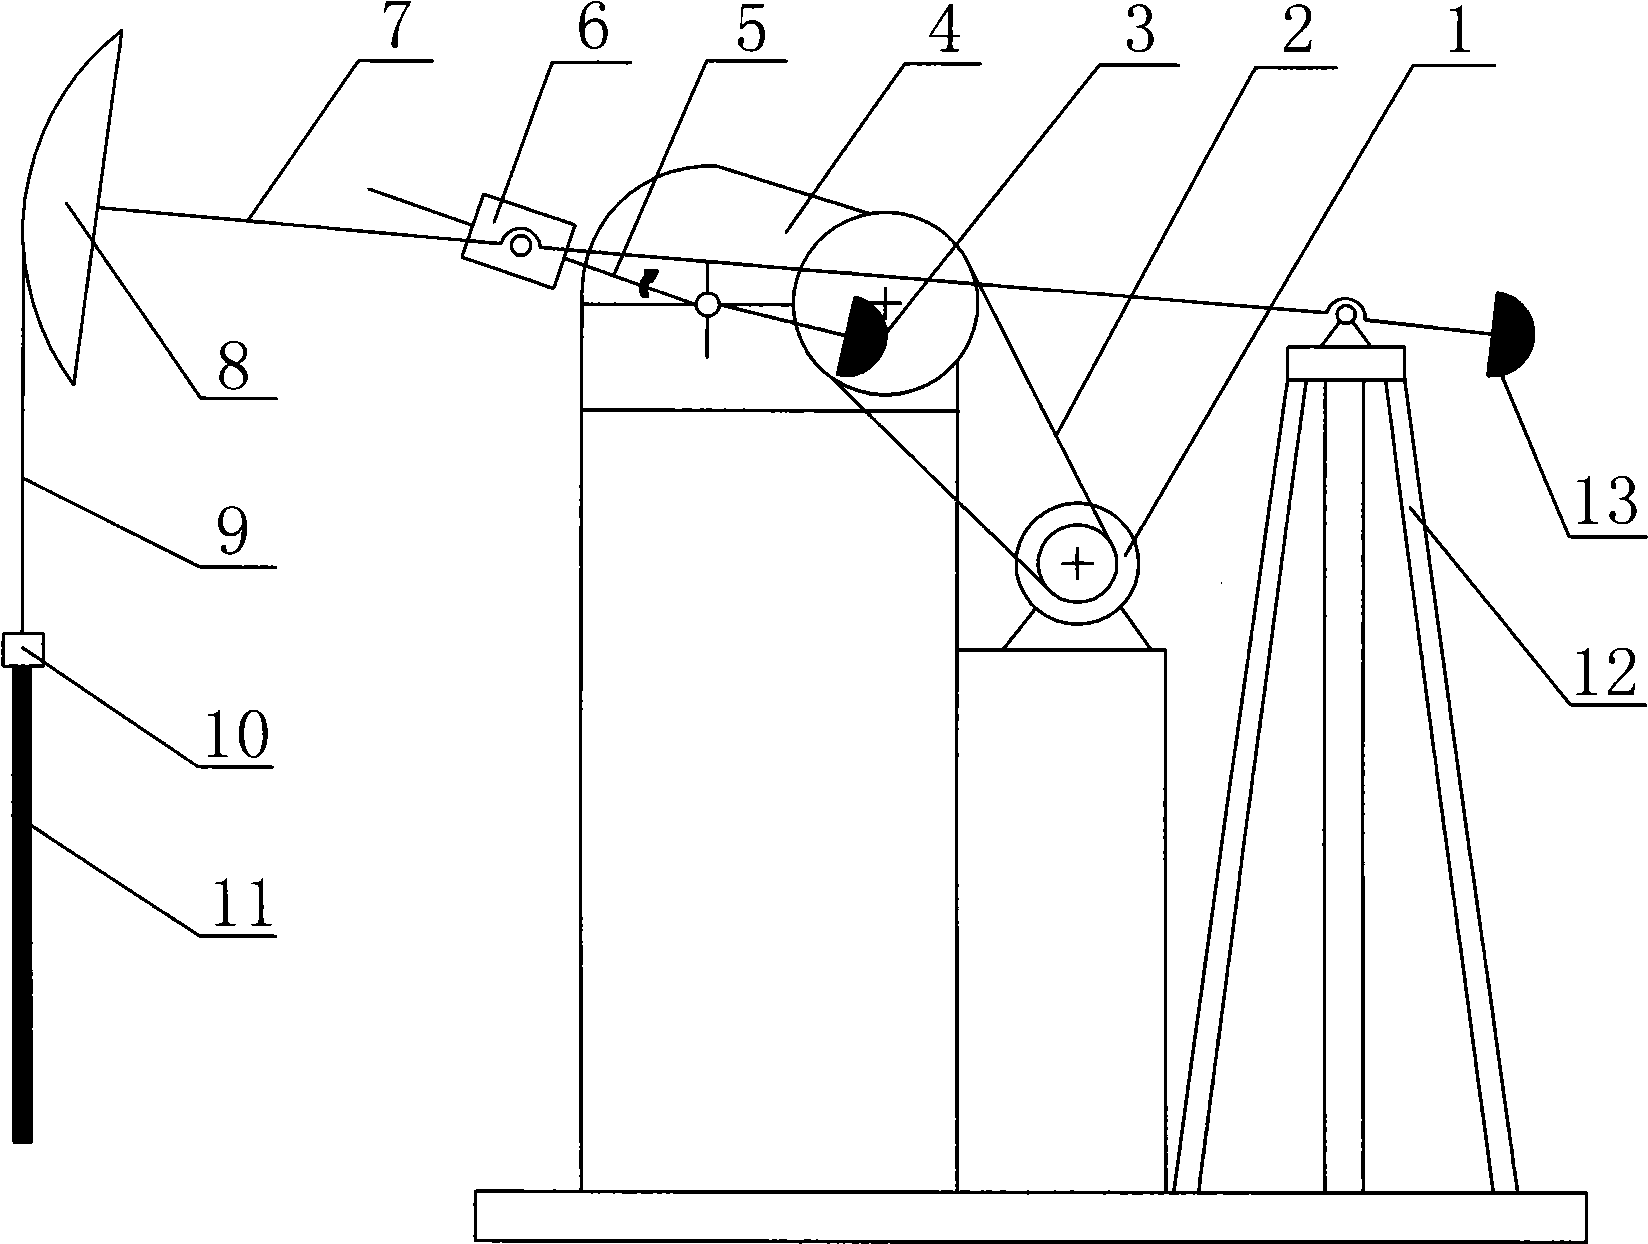 Pendulum guide rod type pumping unit